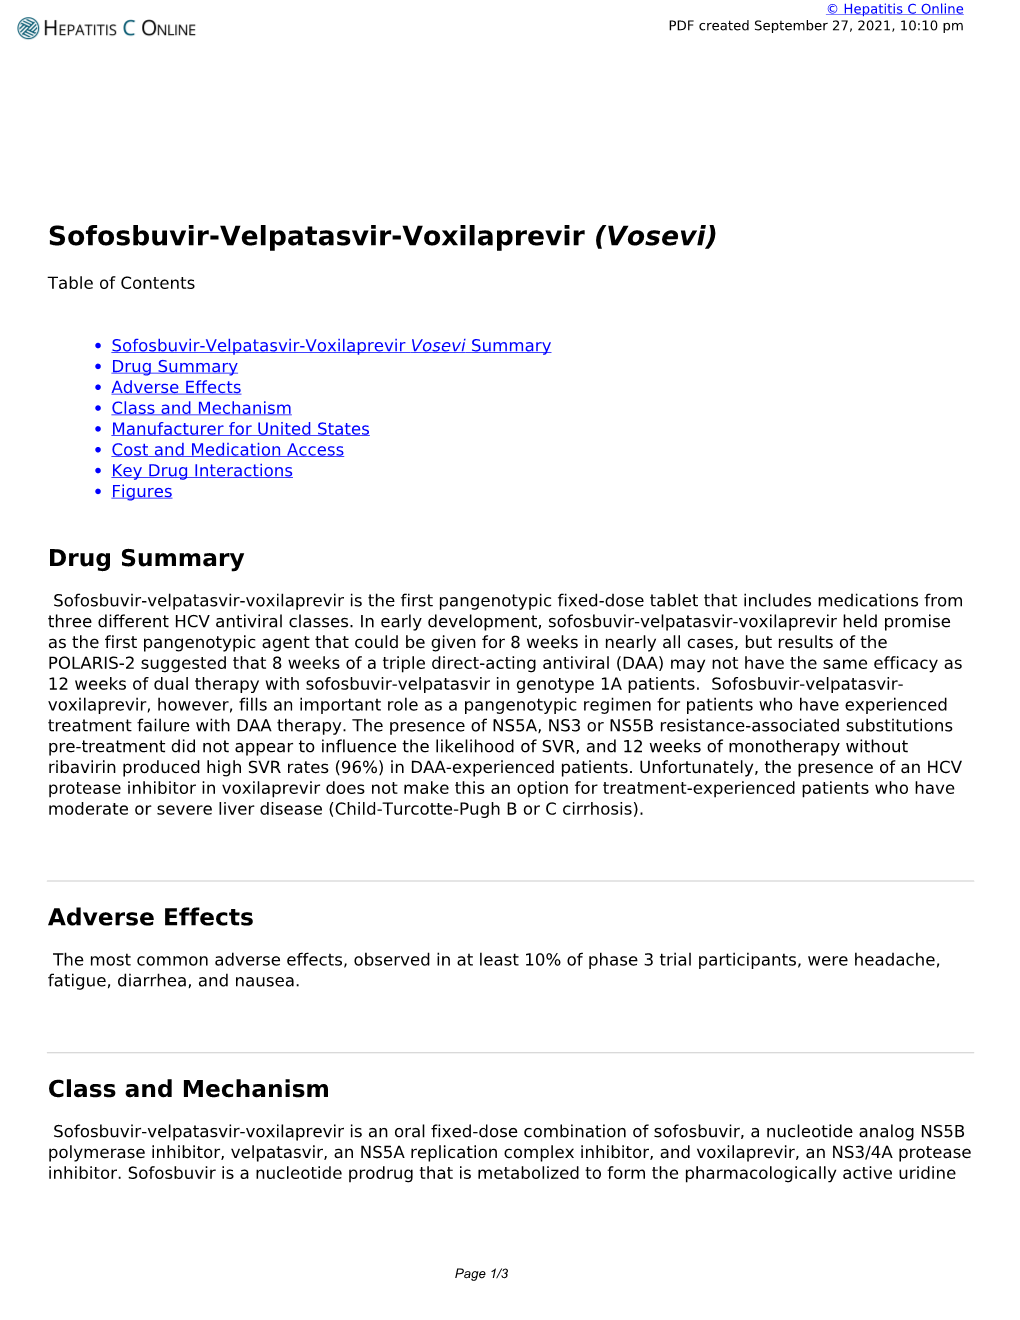 Sofosbuvir-Velpatasvir-Voxilaprevir (Vosevi)